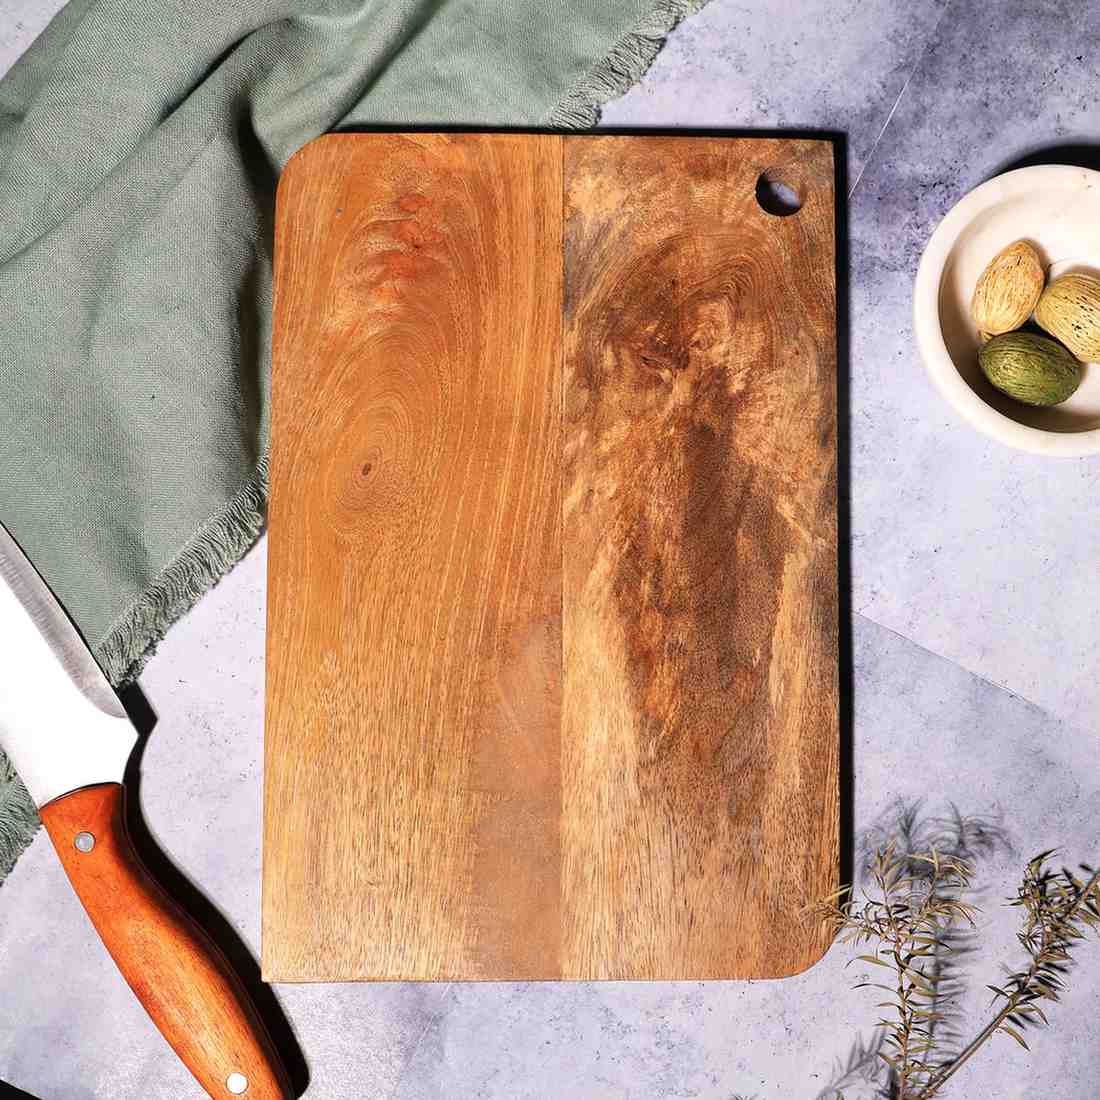 Wooden Chopping Board, Mango Wood, Food Grade Polish, Dishwasher Safe